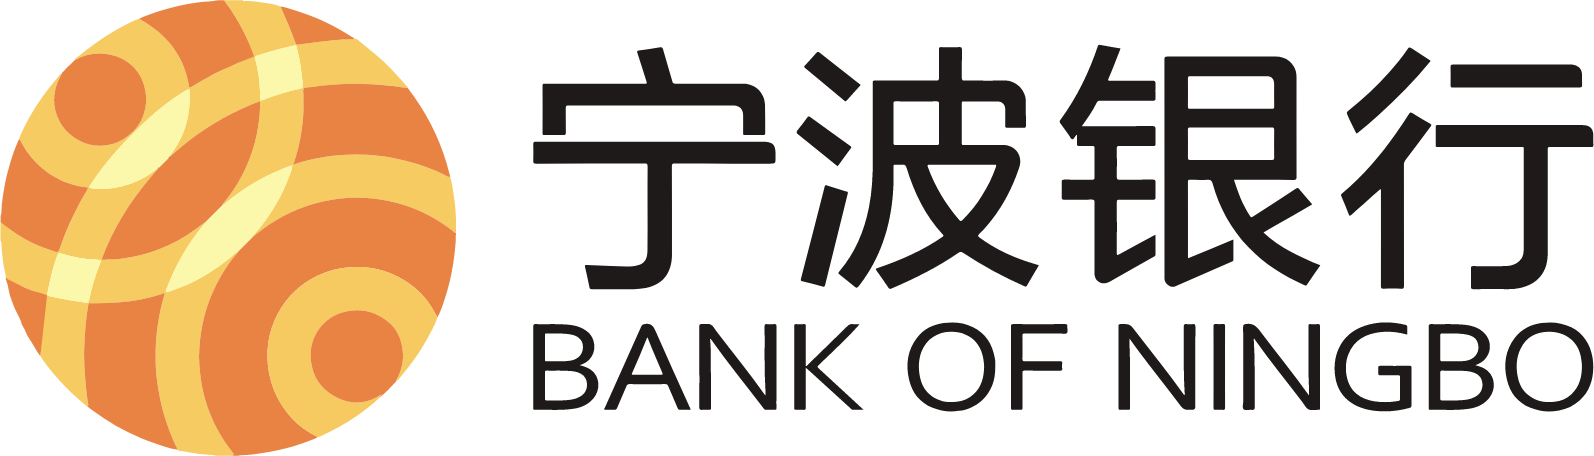 Bank of Ningbo
 logo large (transparent PNG)